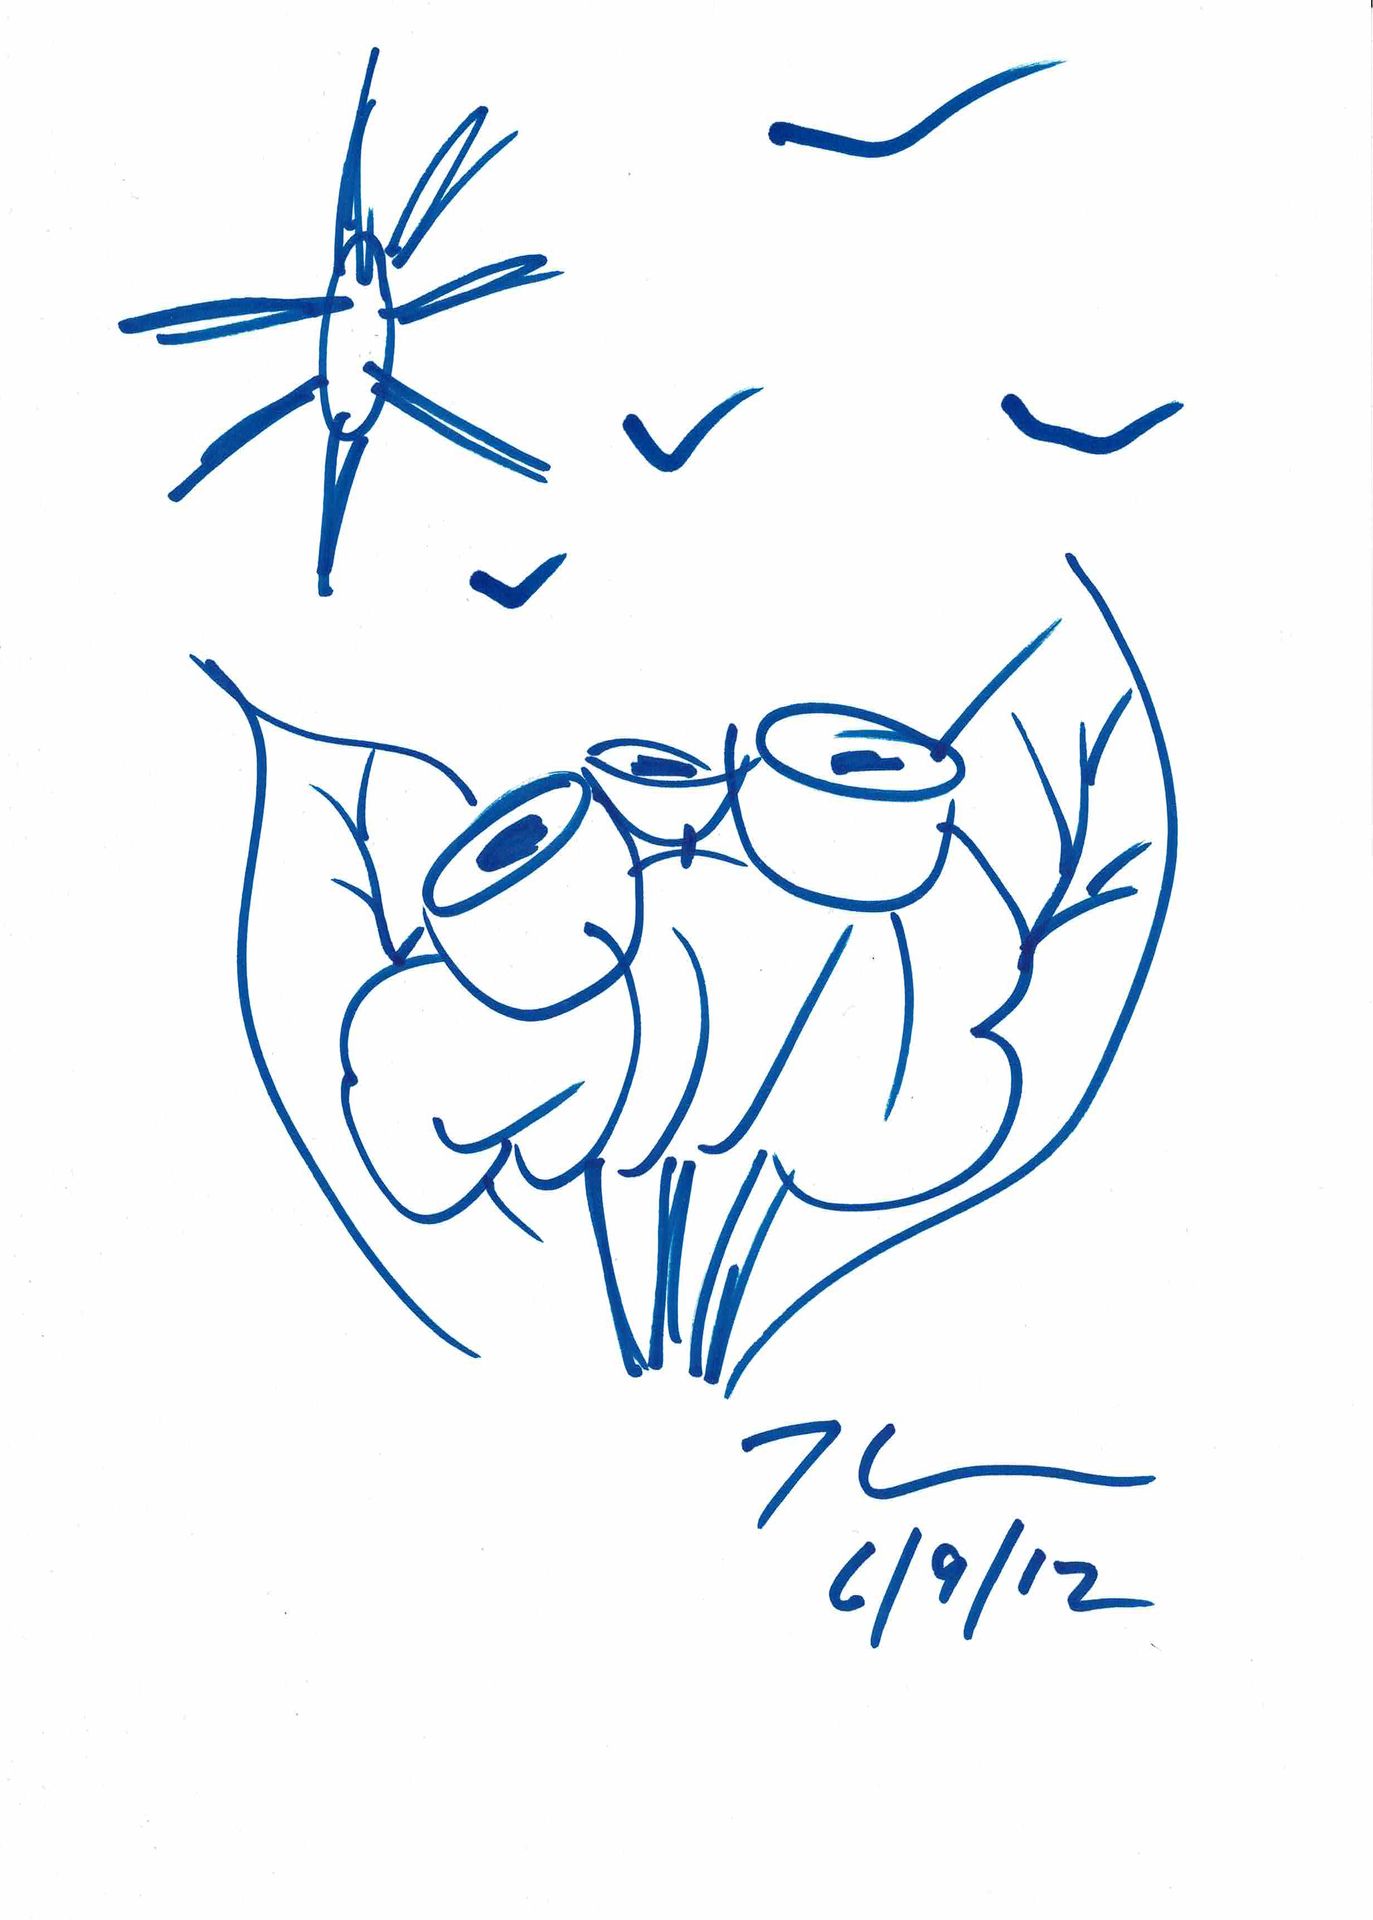 JEFF KOONS (NÉ EN 1955) 杰夫-昆斯

阳光之花

蓝色水墨画

右下方有签名和日期

29.7 x 21 cm

出处：英国收藏

有框